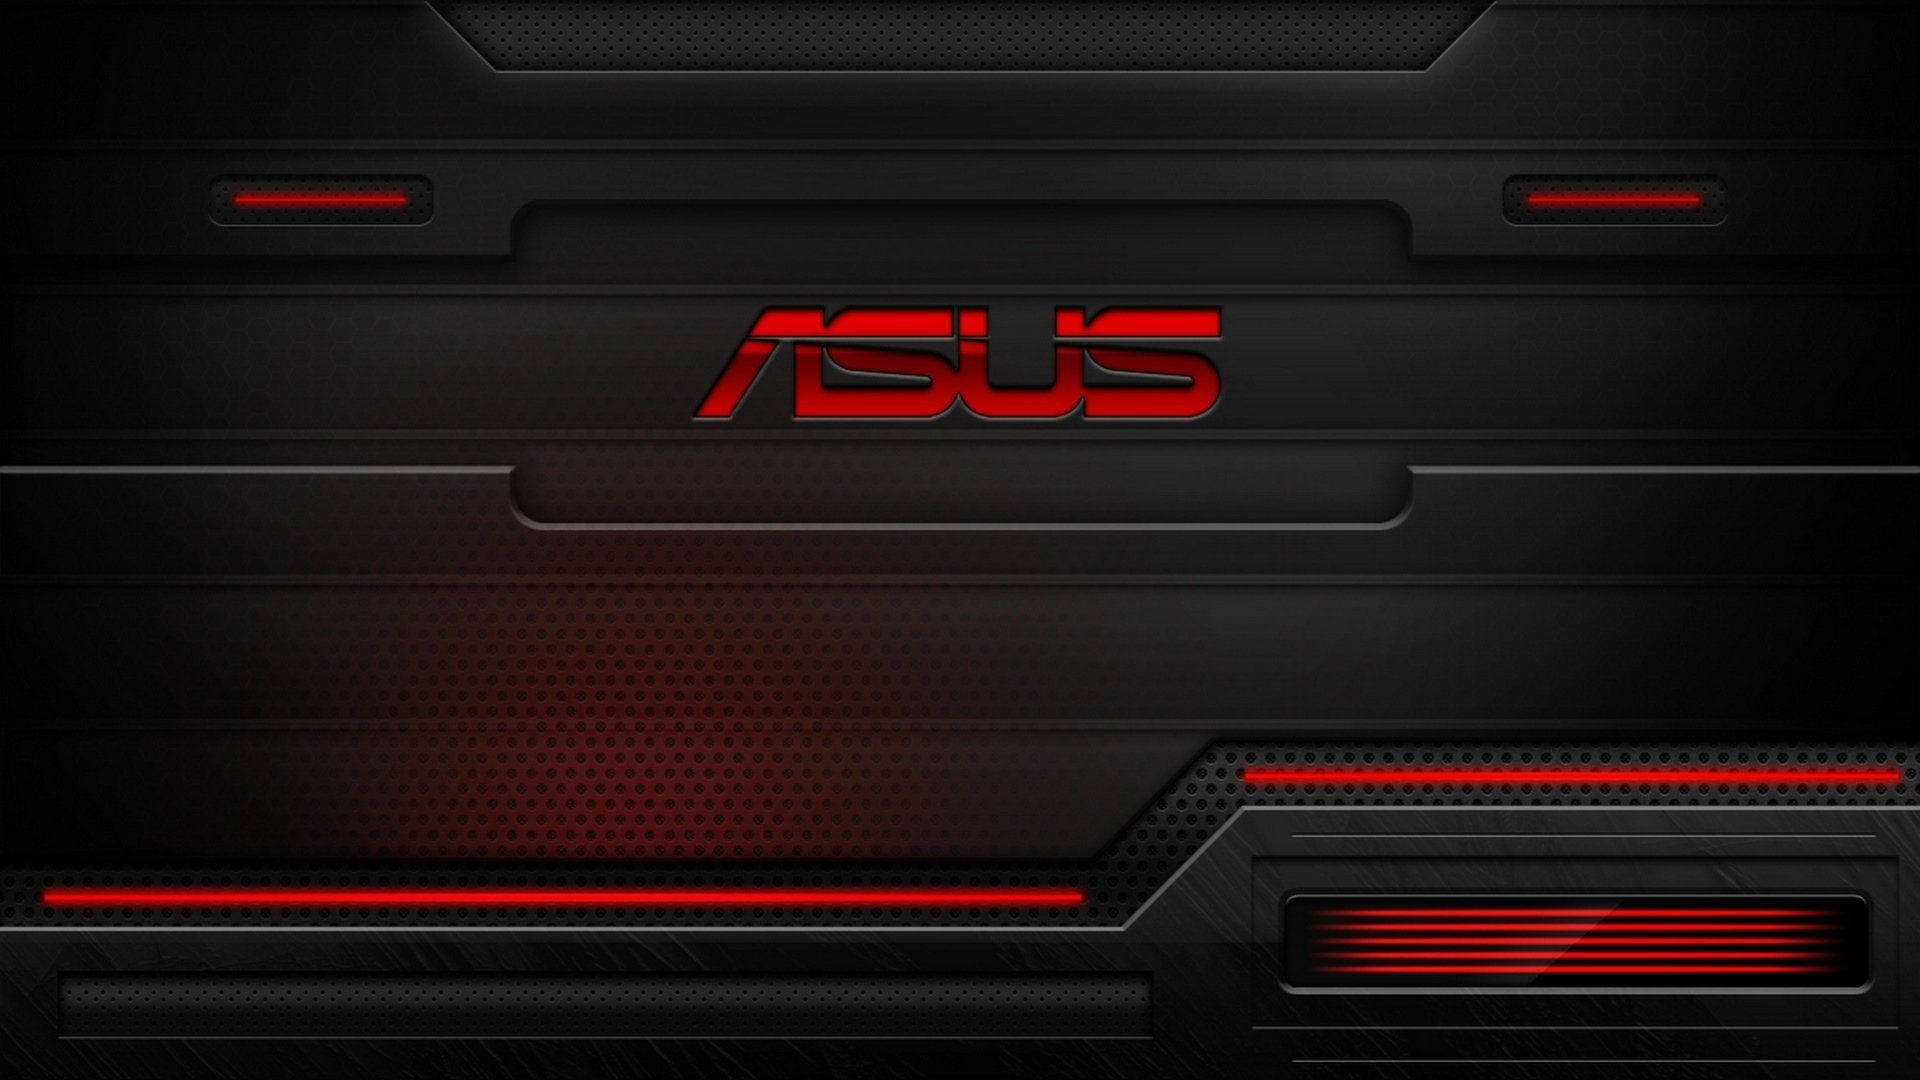 Asus Neon Red Logo